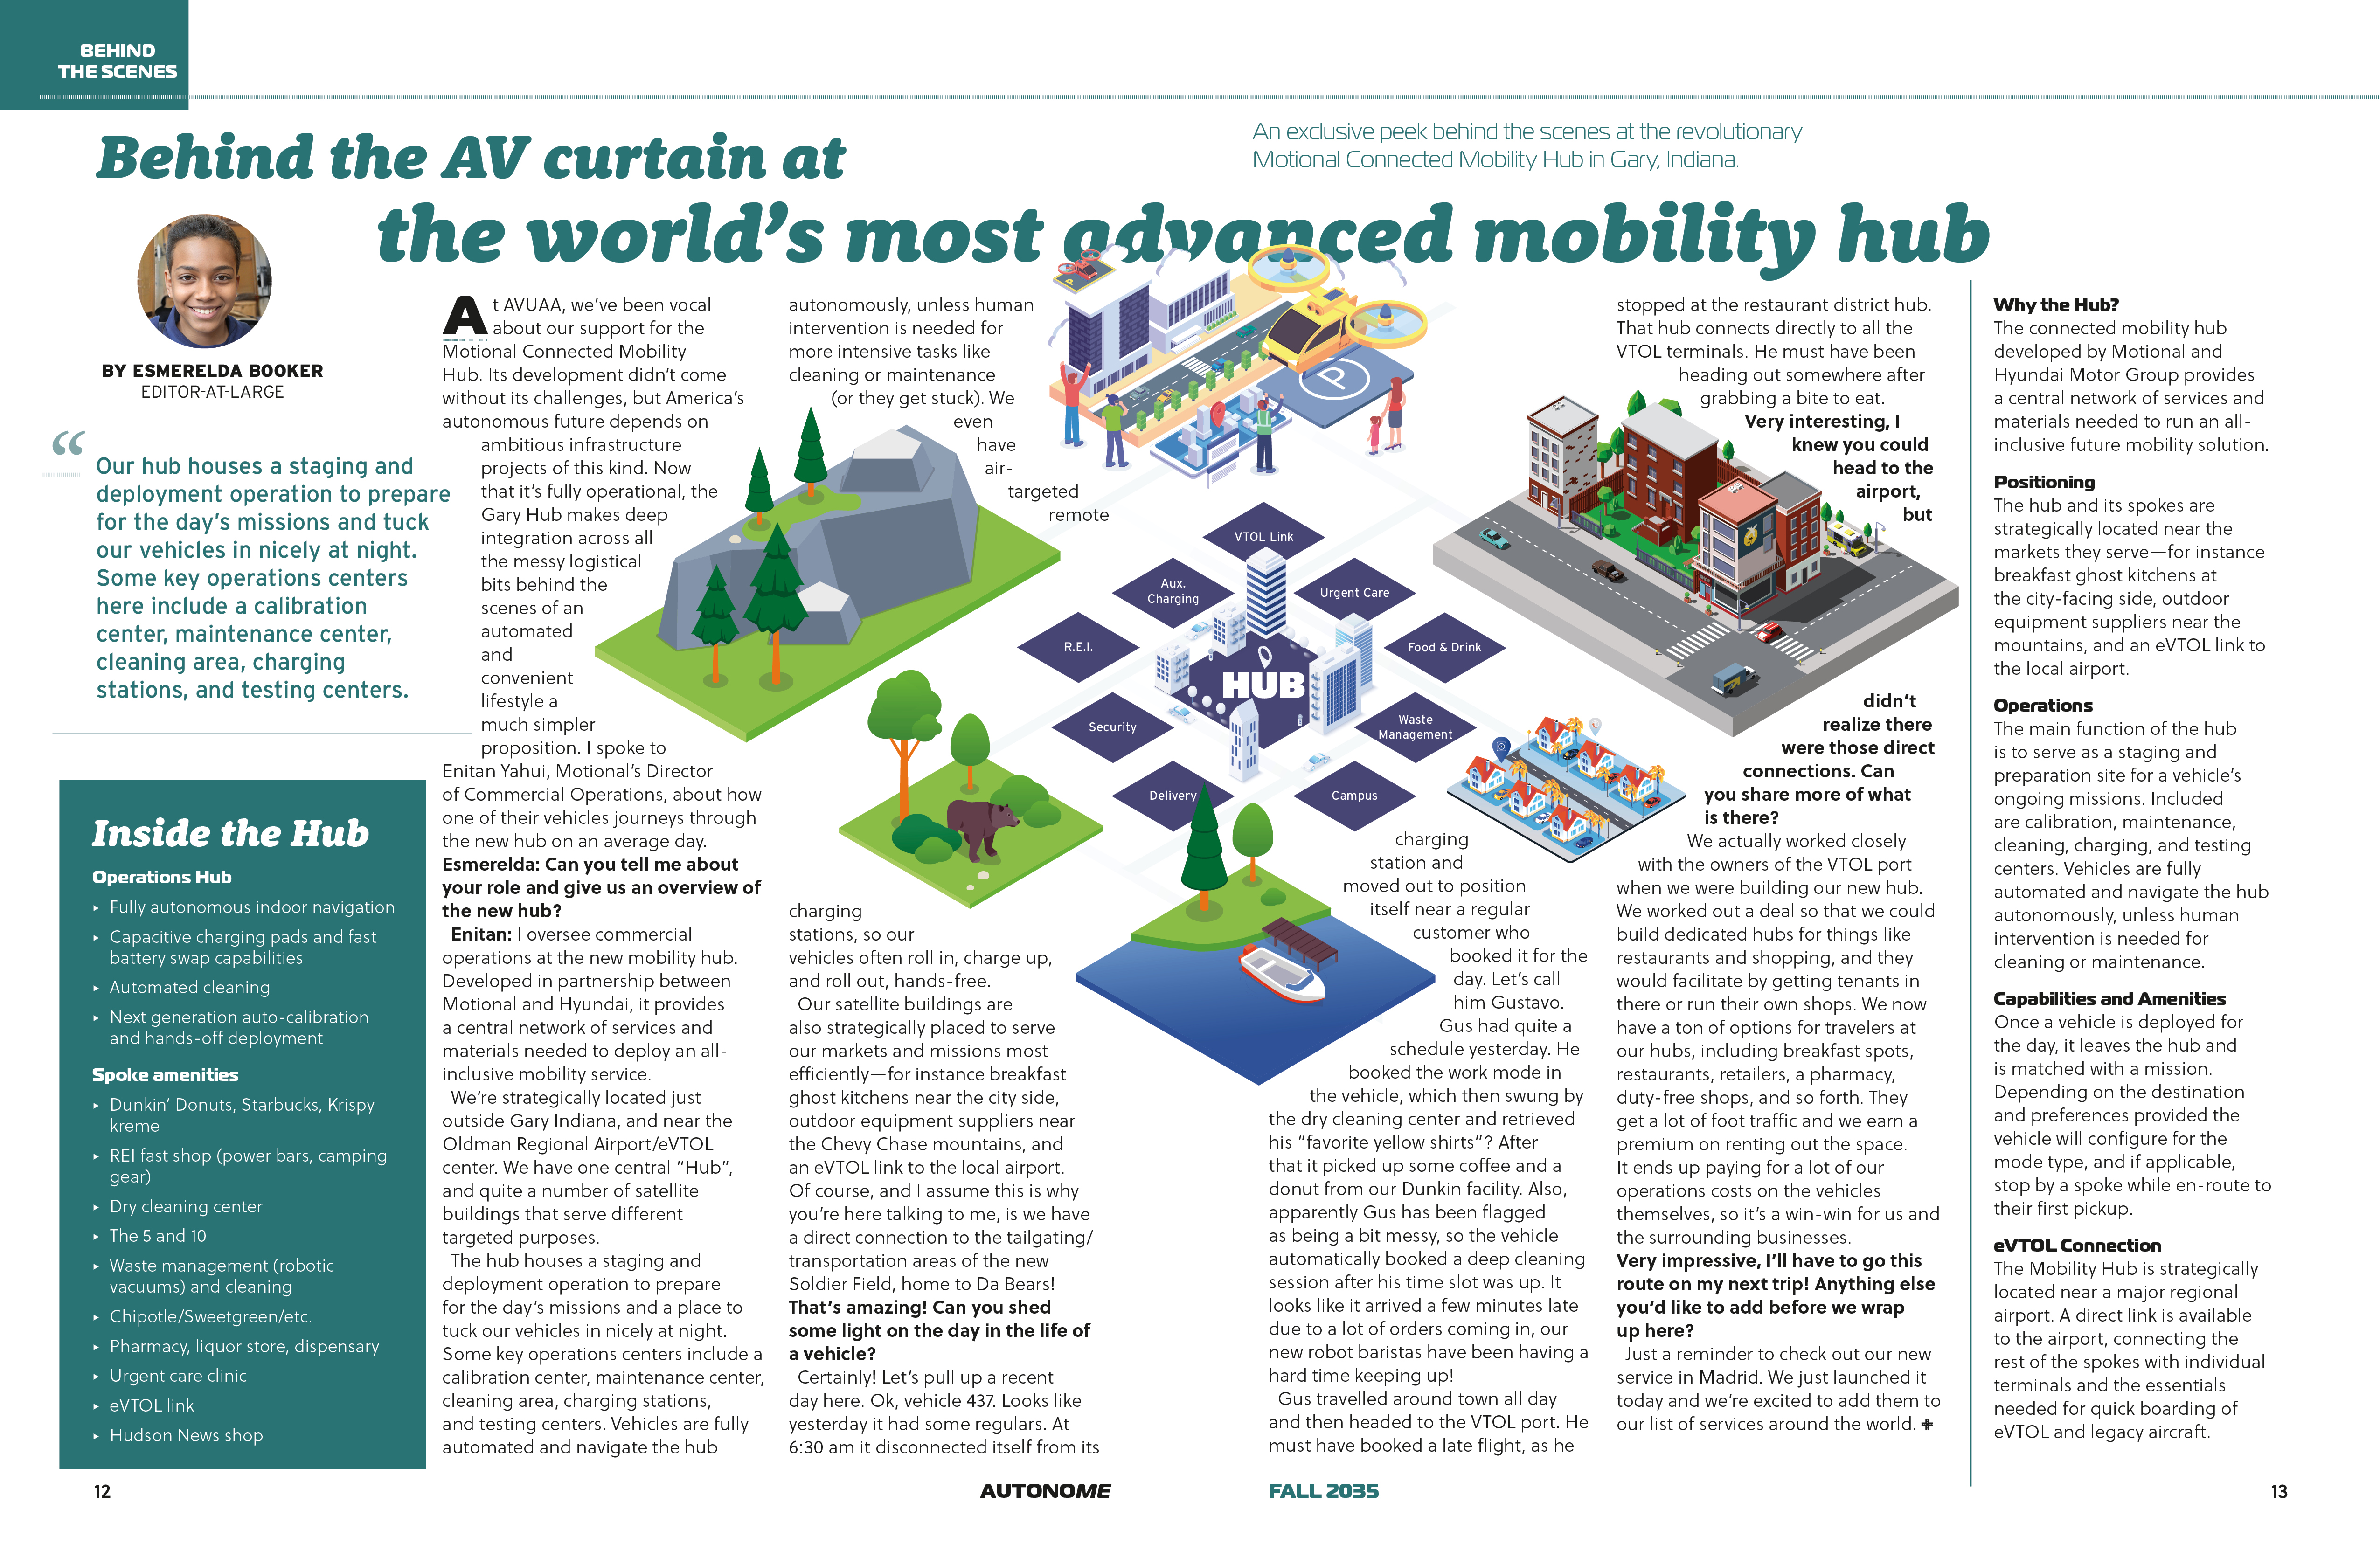 Spread from the Near Future Laboratory's magazine from a possible autonomous vehicle future